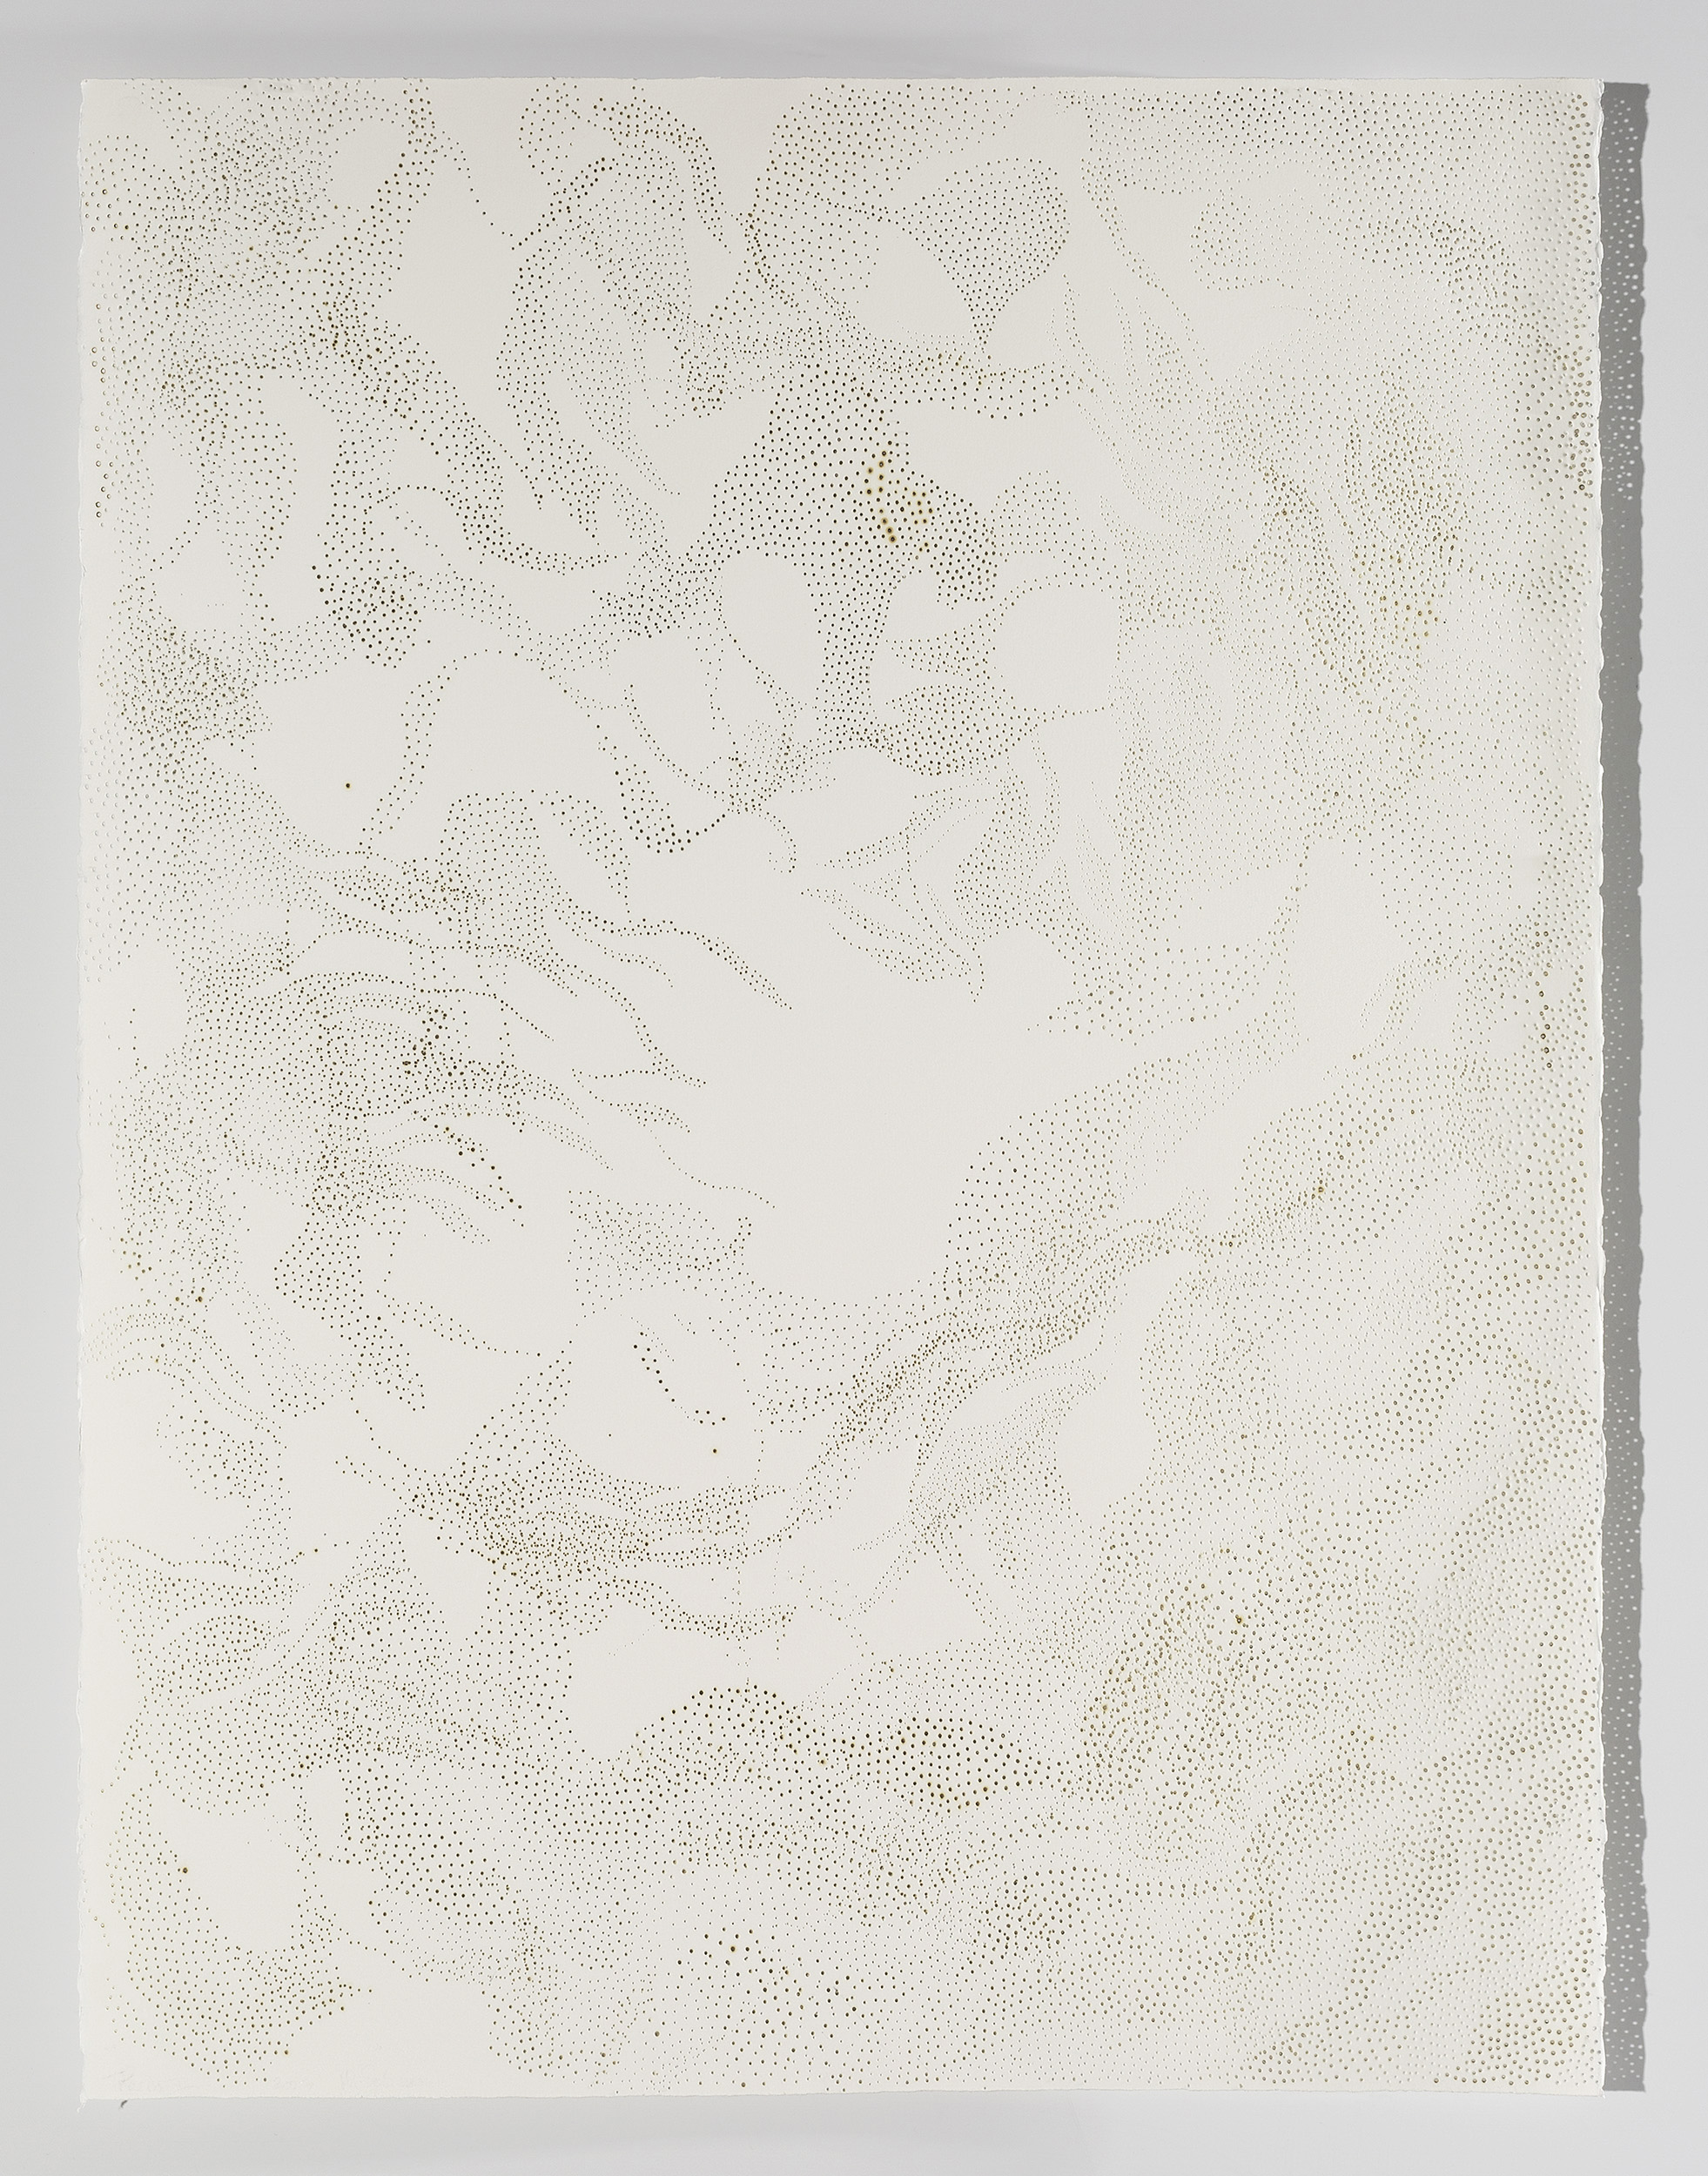 Melinda Schawel 'Traces I' perforated paper 76 x 57cm $3,800